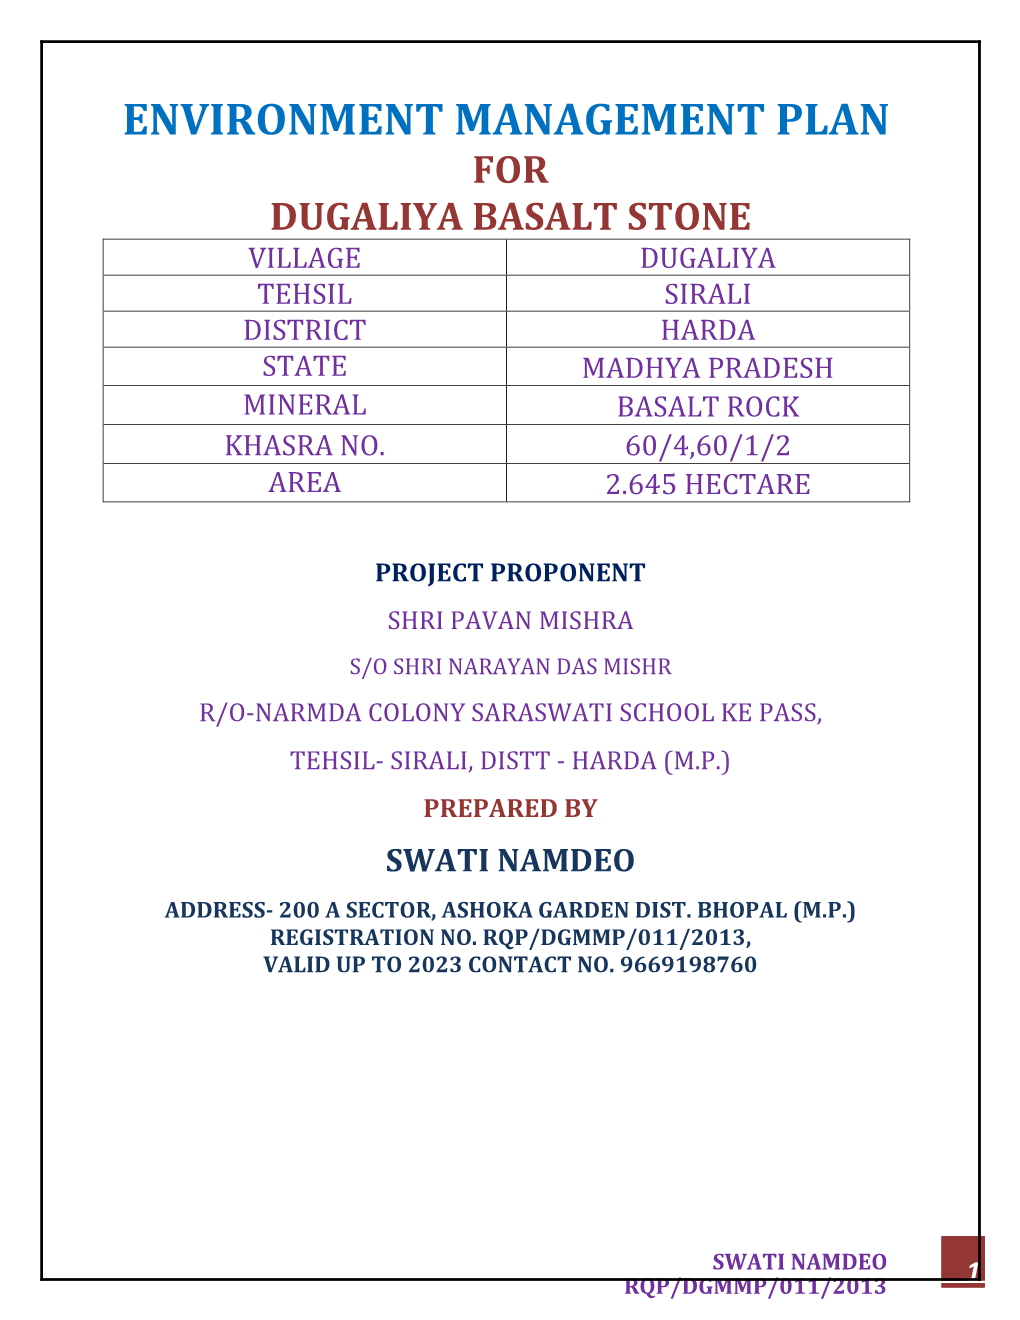 Environment Management Plan for Dugaliya Basalt Stone Village Dugaliya Tehsil Sirali District Harda State Madhya Pradesh Mineral Basalt Rock Khasra No